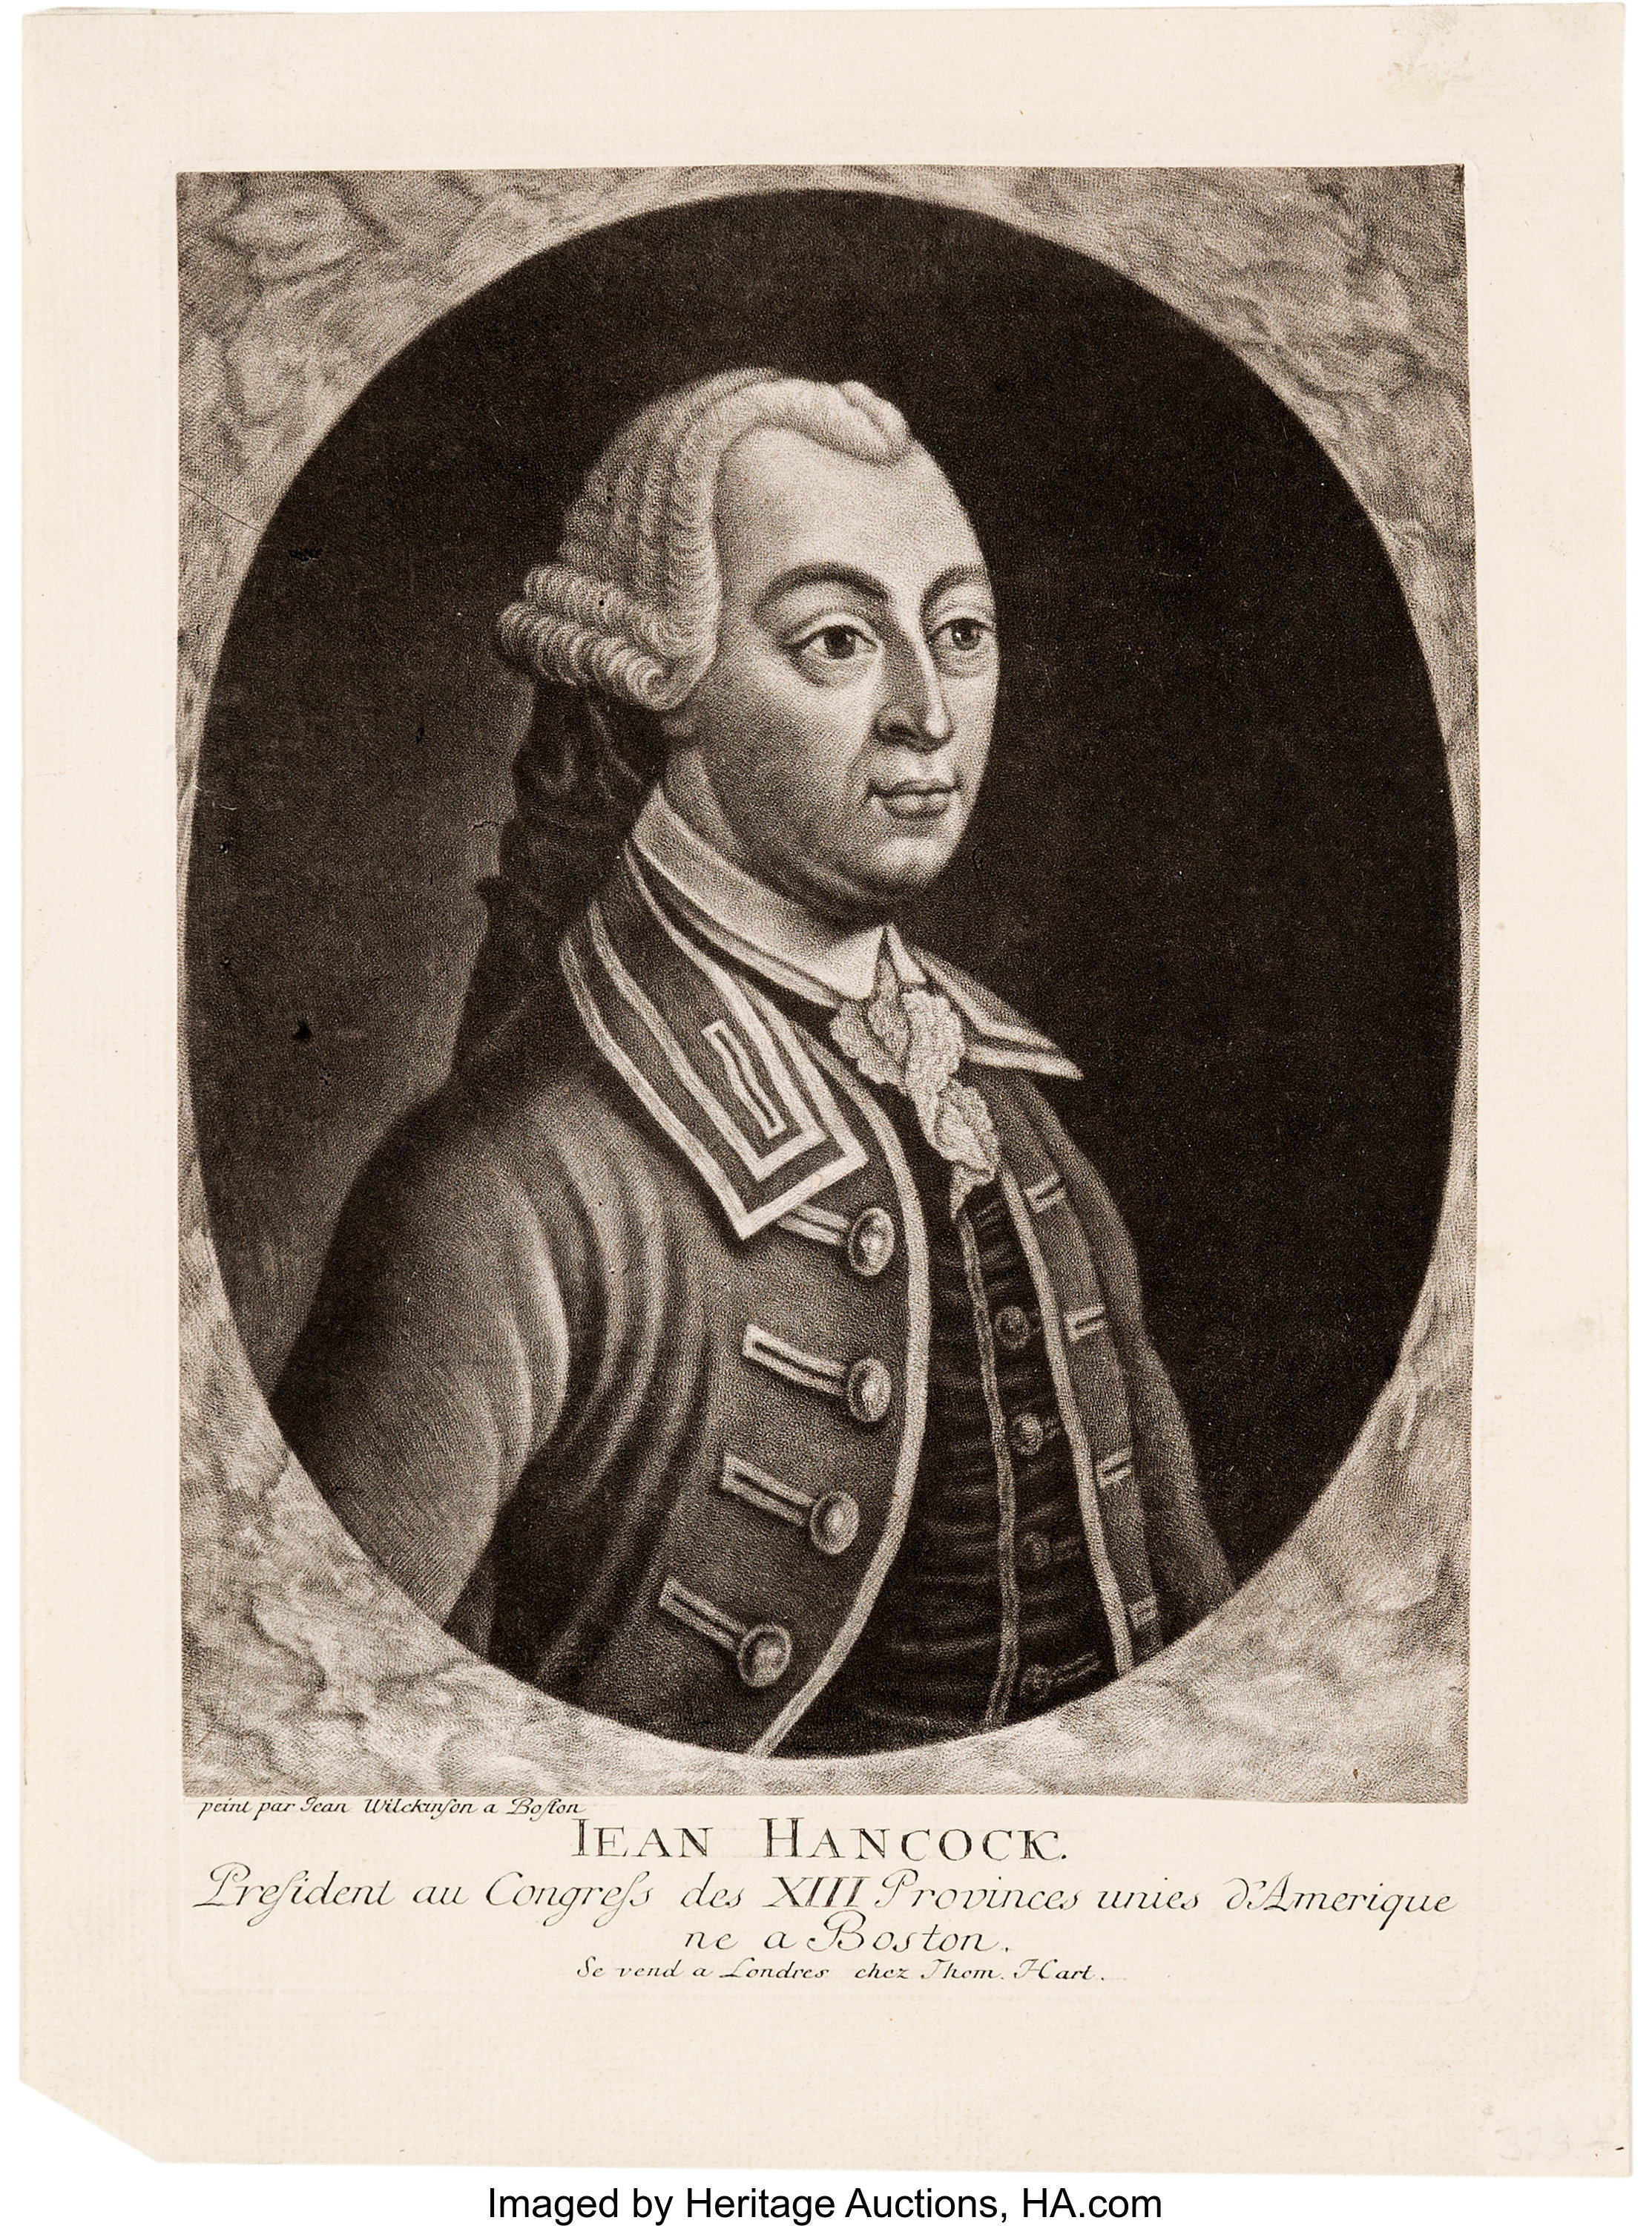 john hancock portrait